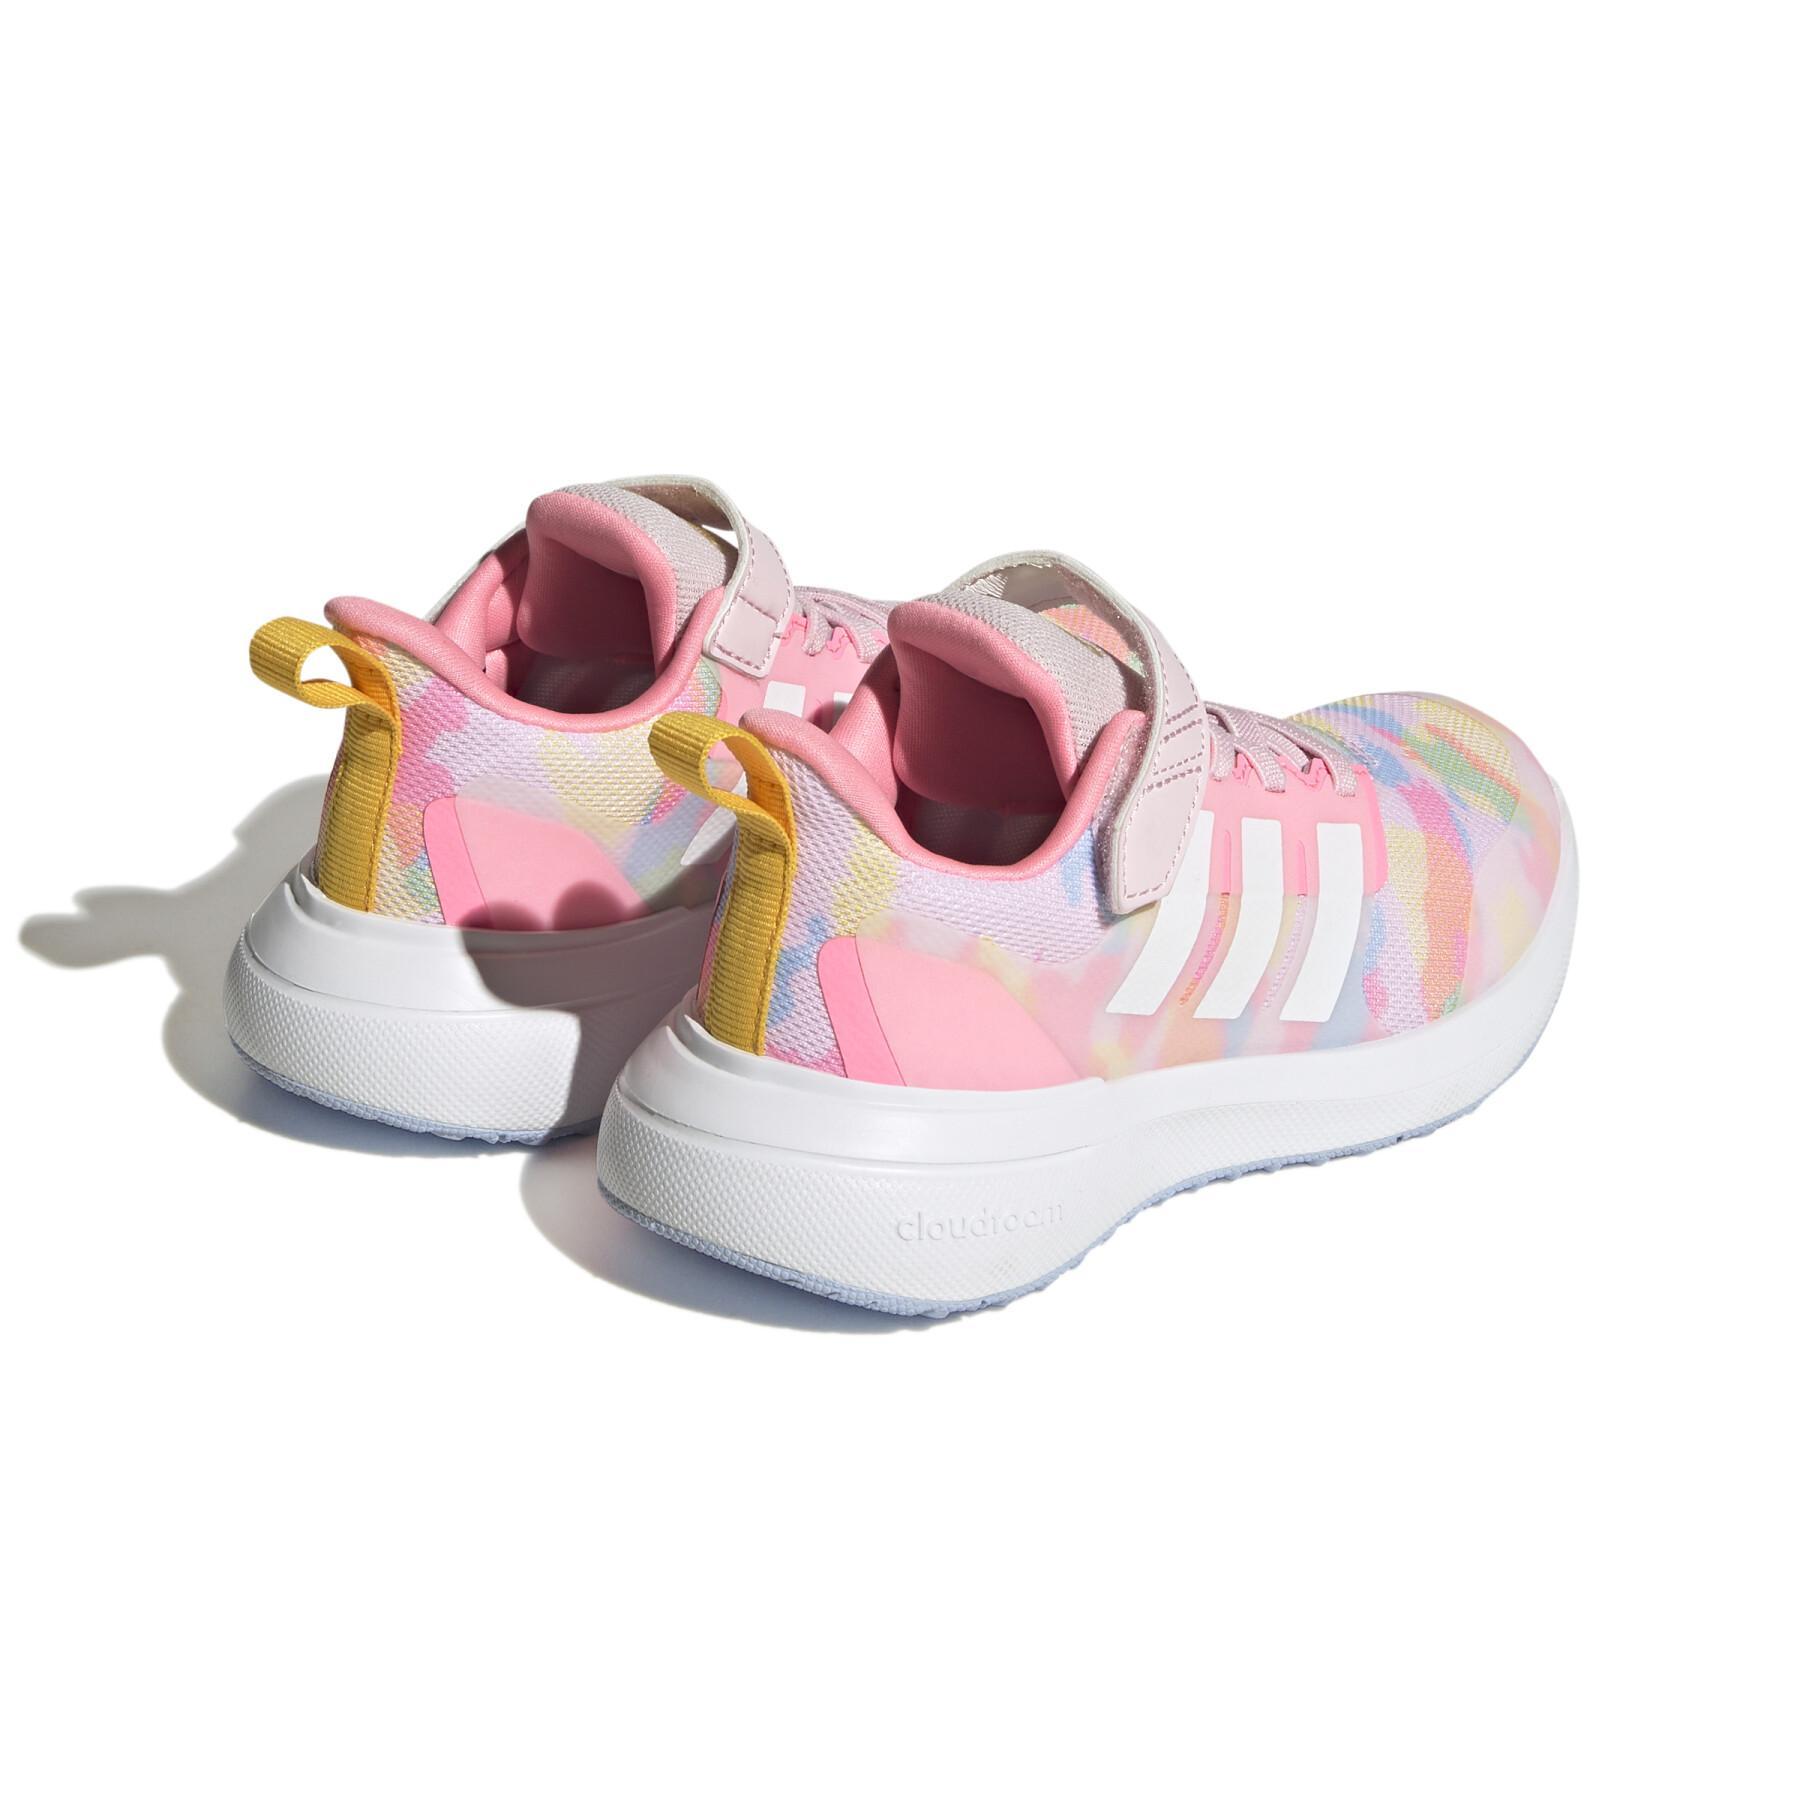  running buty dziecięce adidas Fortarun 2.0 Cloudfoam